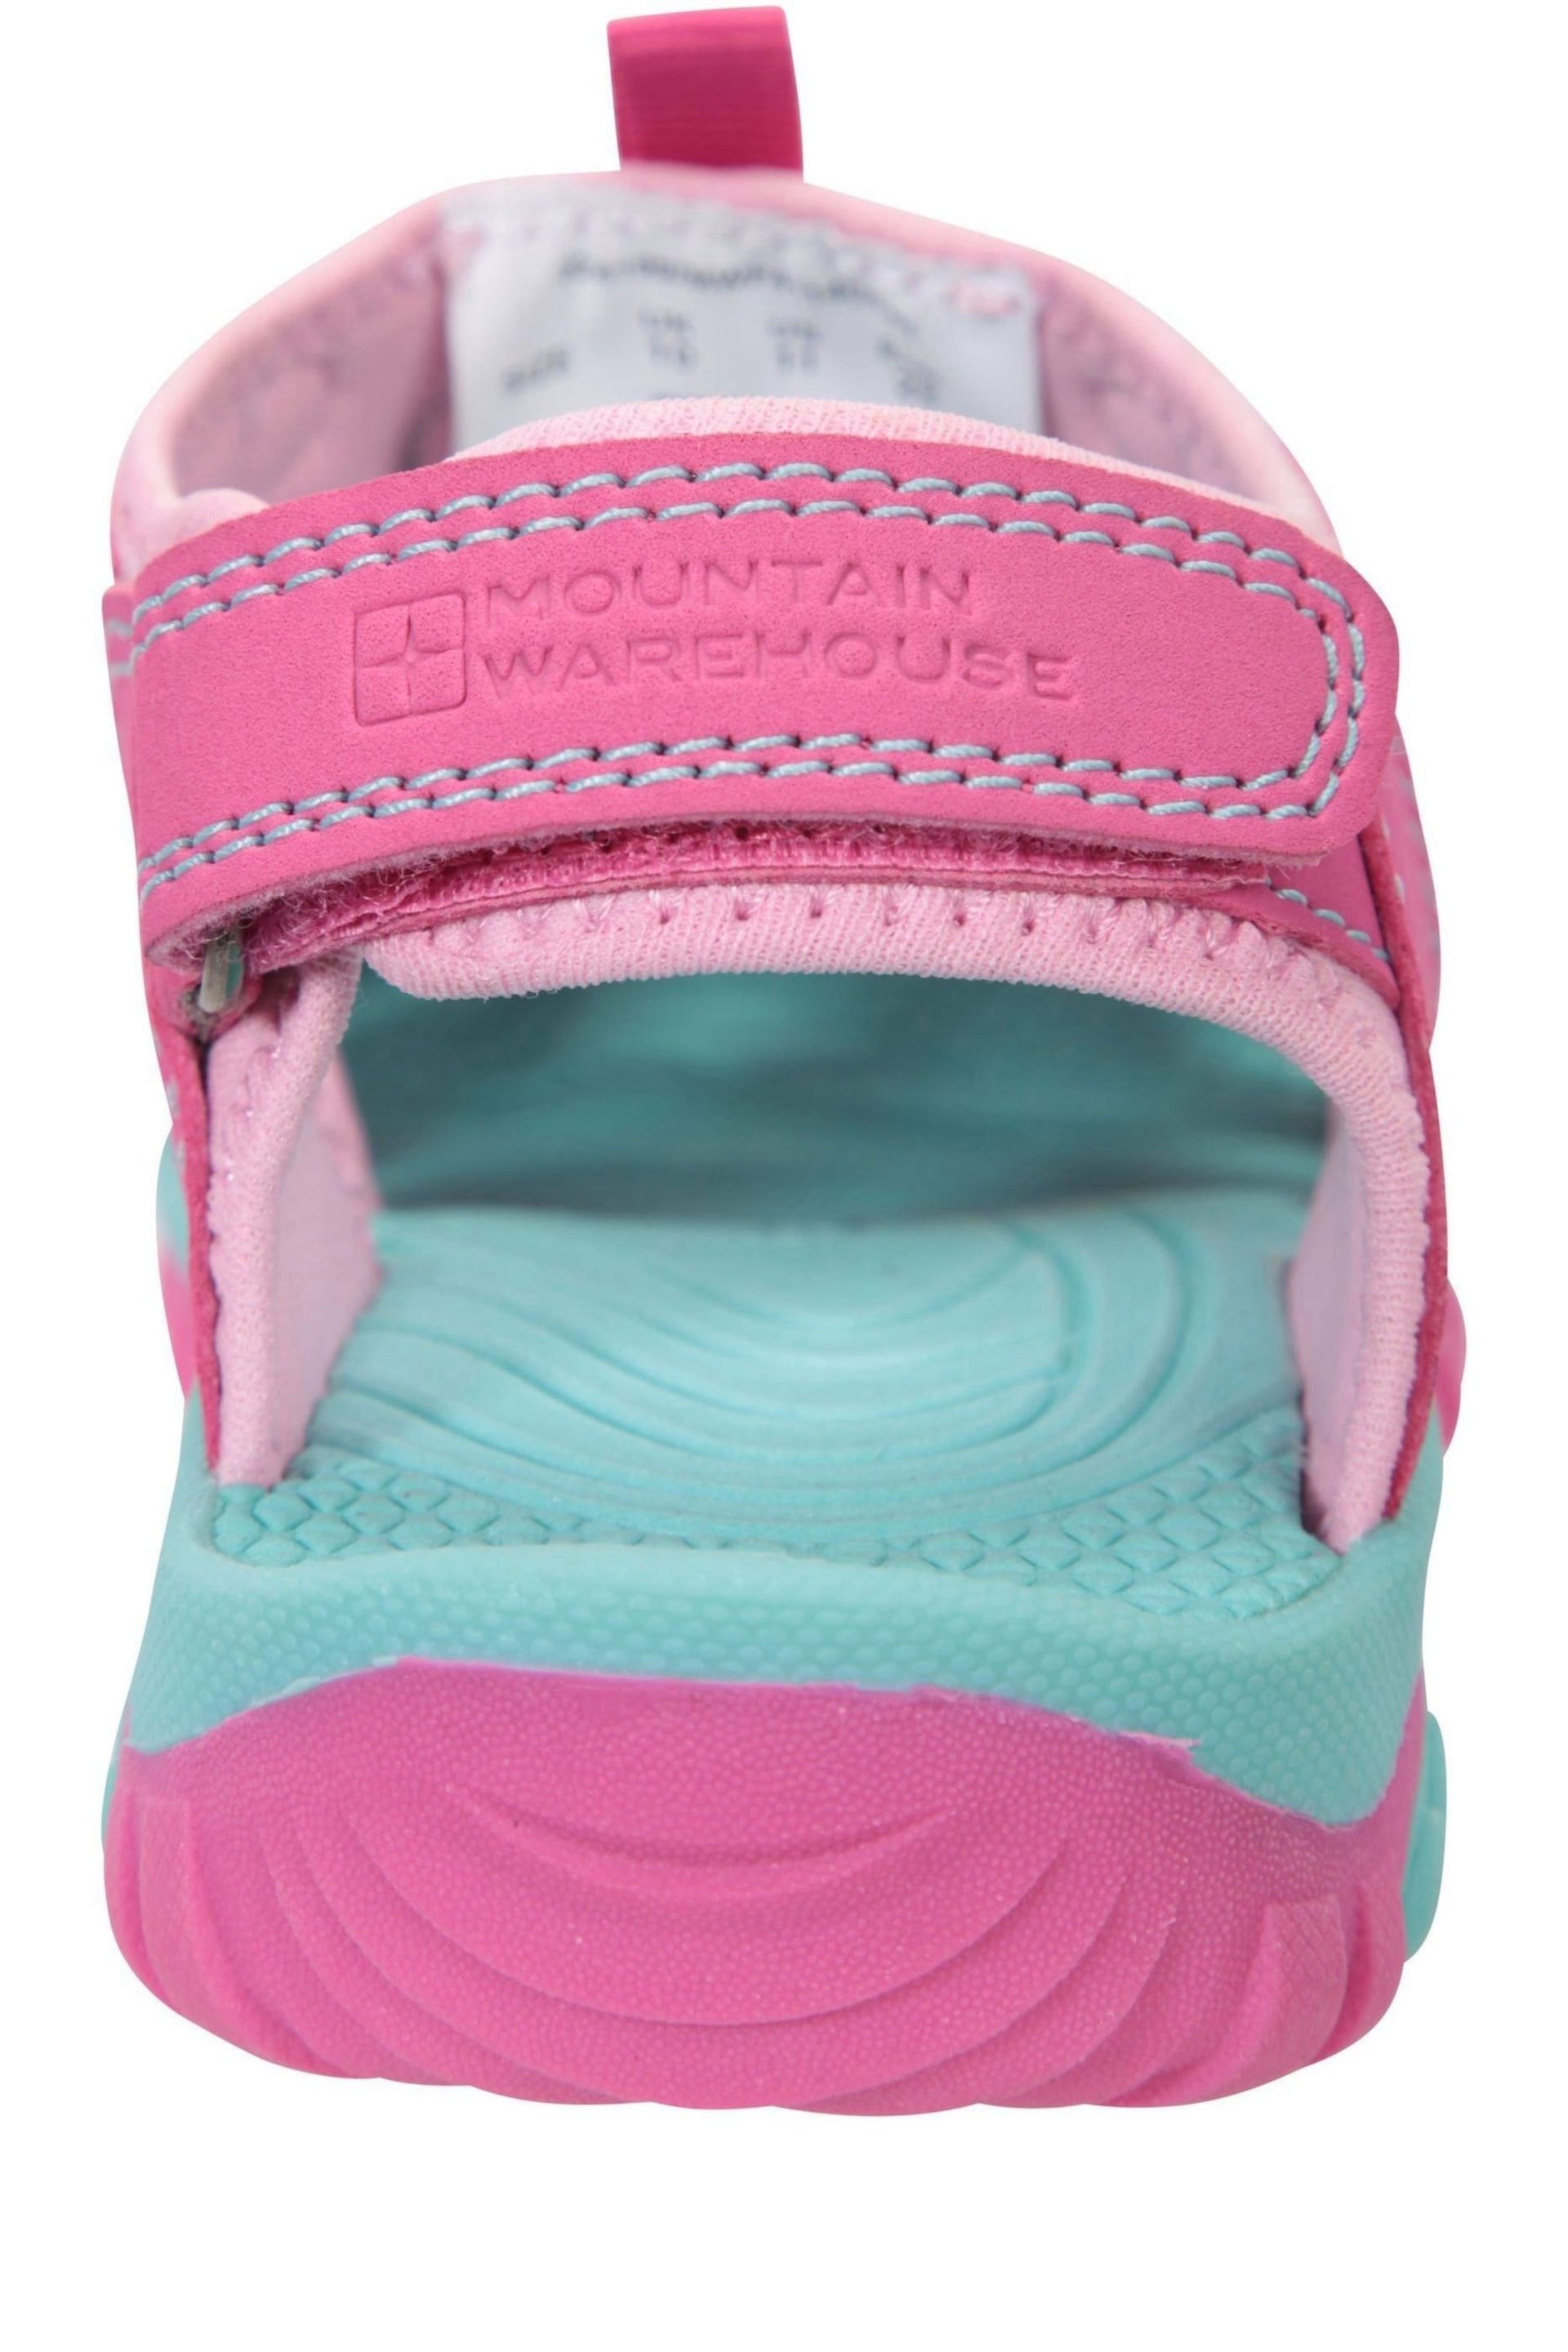 Mountain Warehouse Pink Bay Toddler Sandals - Image 5 of 5